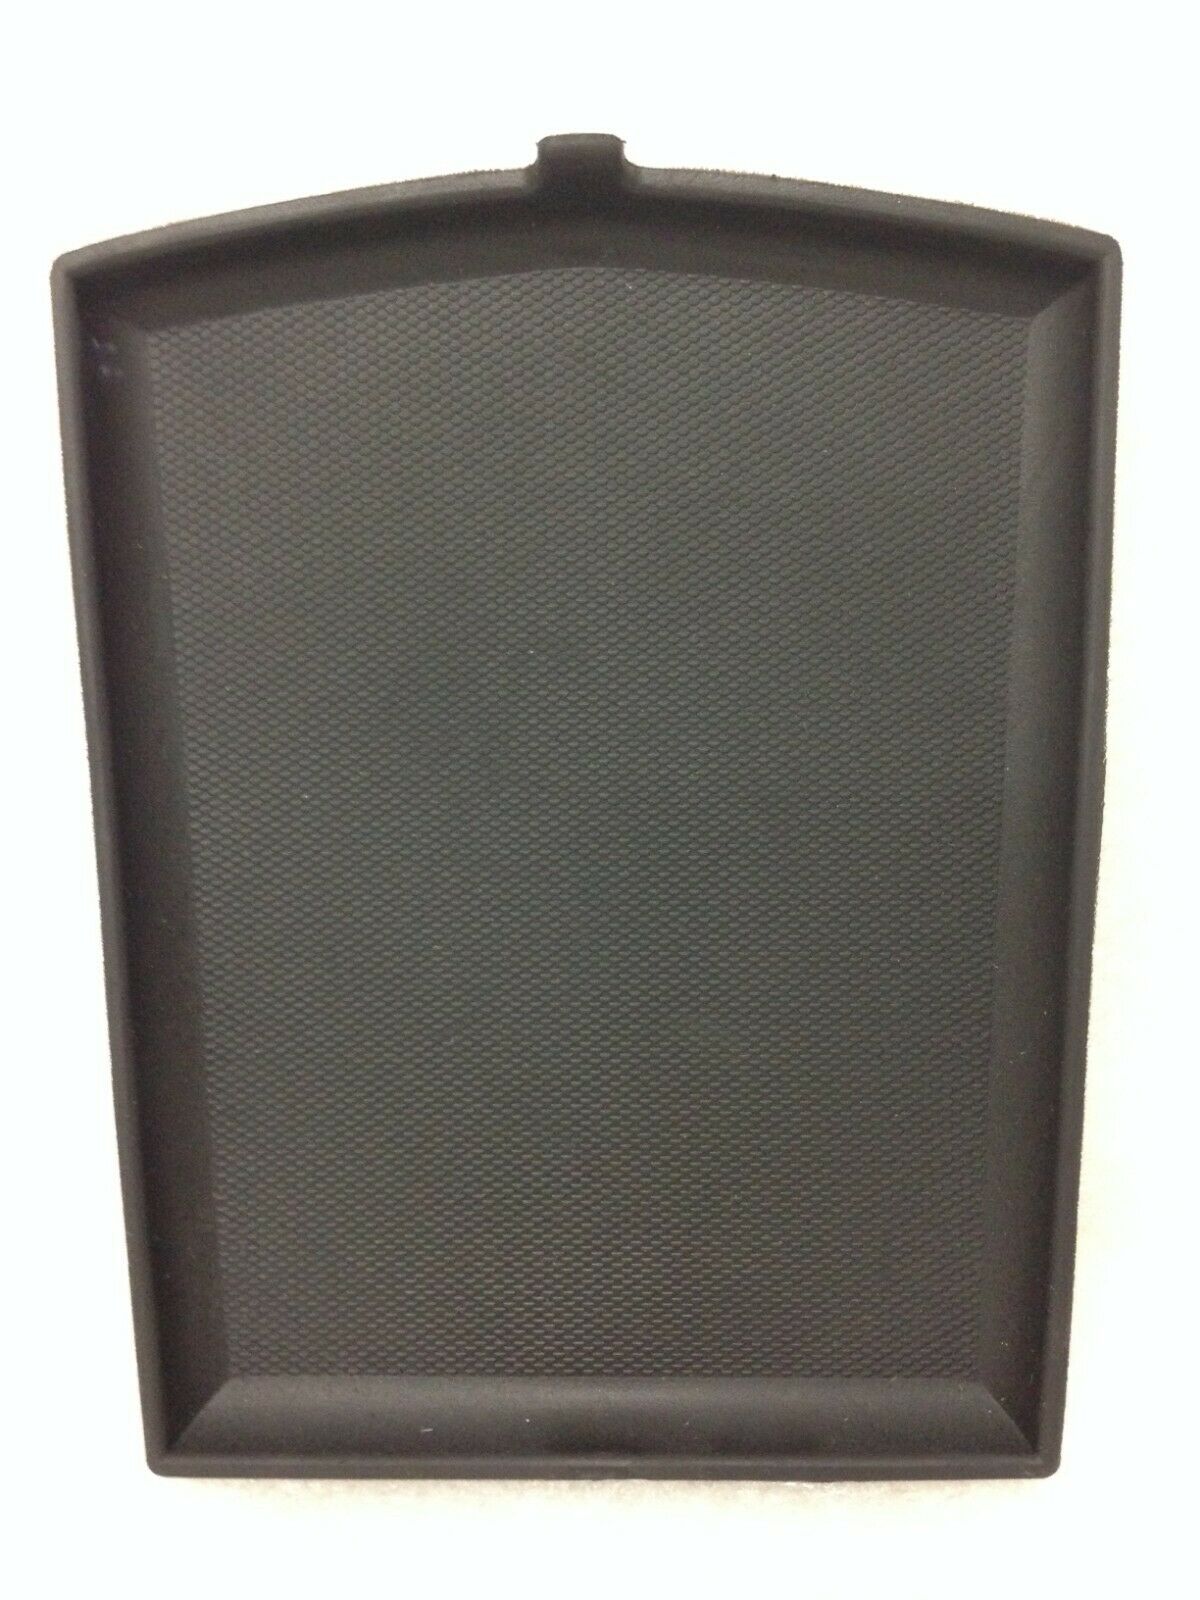 Cadillac XTS 2013+ console rubber storage bin insert NEW